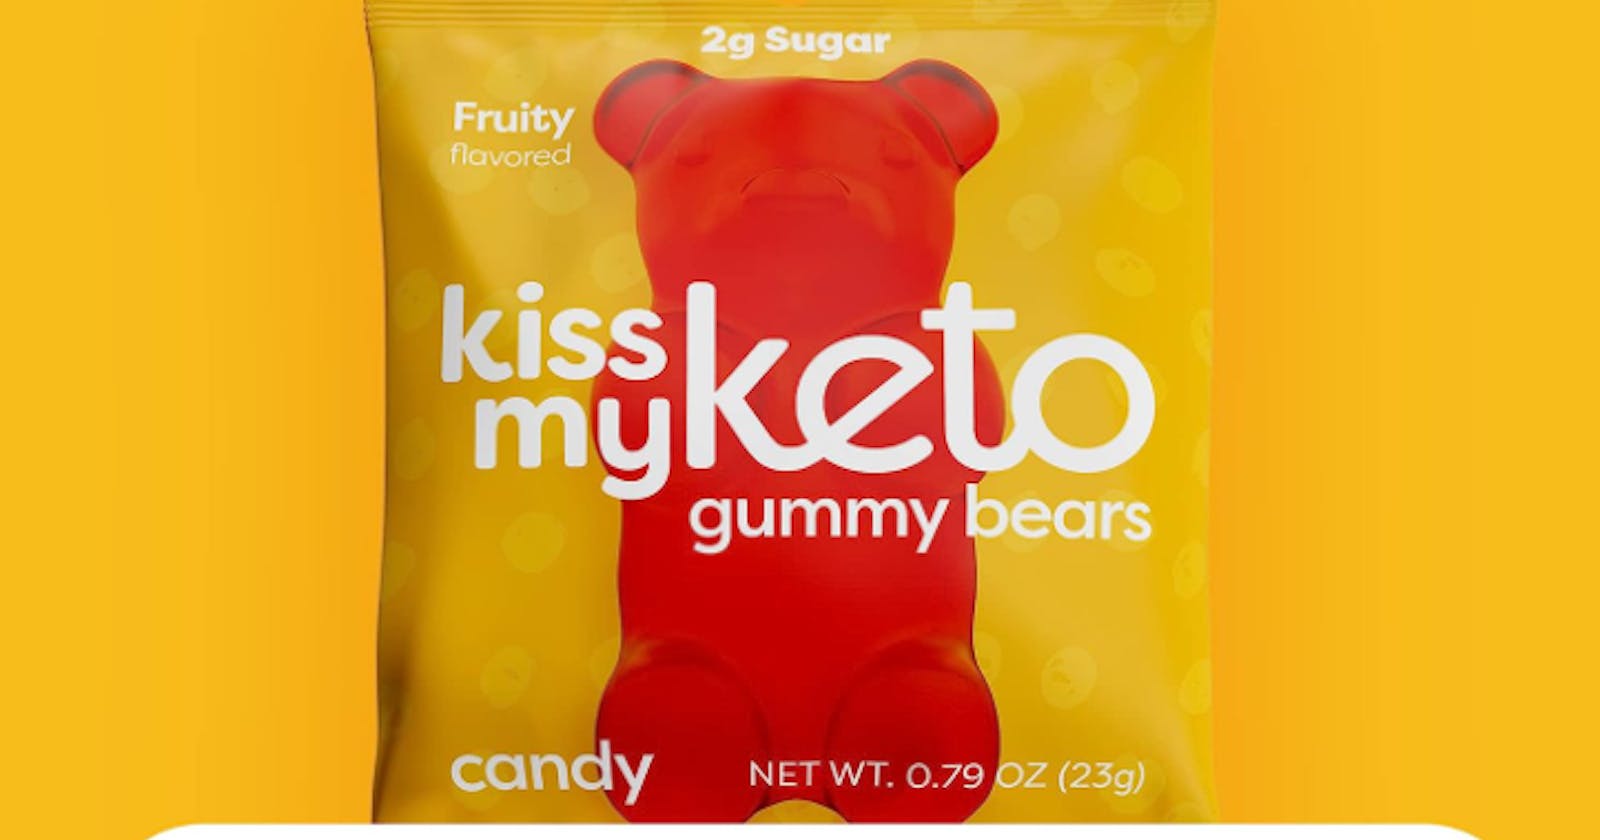 Kiss My Keto Gummies Reviews, Cost, Price, Amazon, Ingredients?